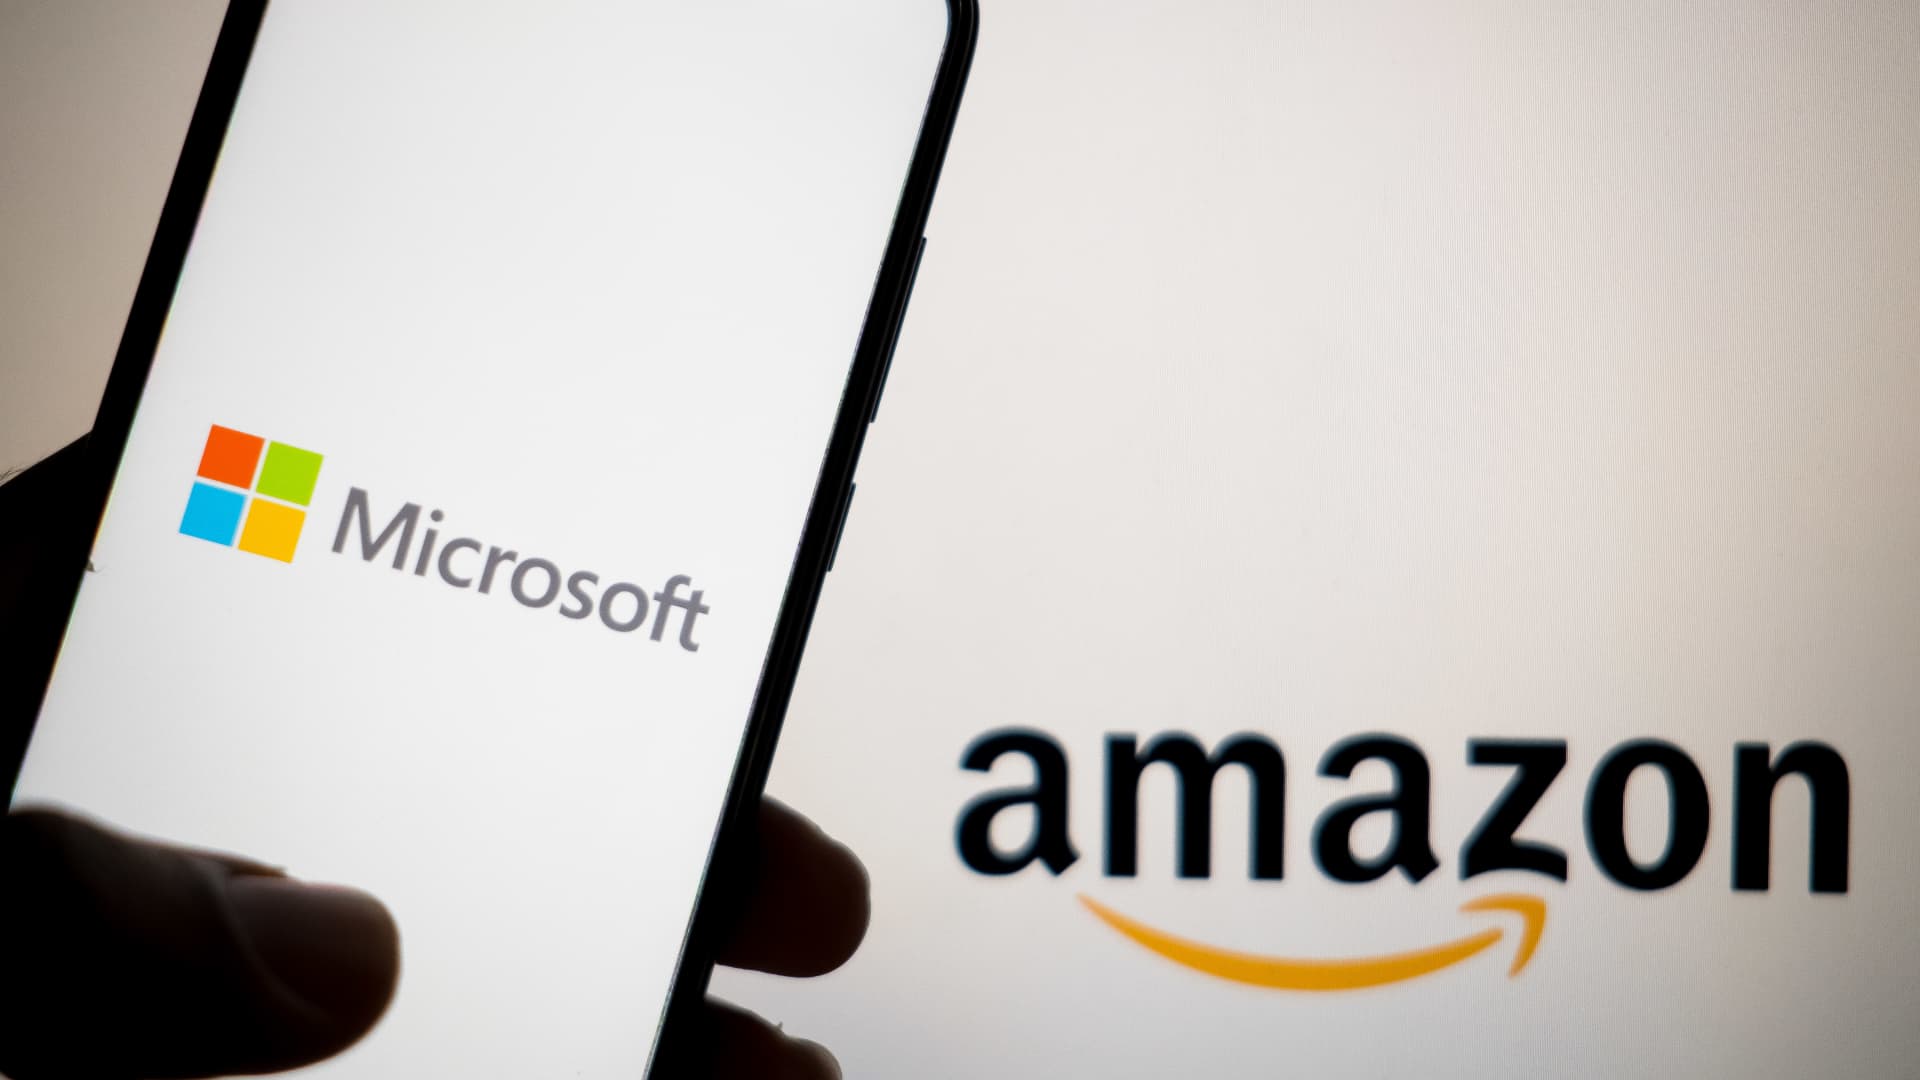 Microsoft, Amazon AI partnerships face scrutiny from British regulators